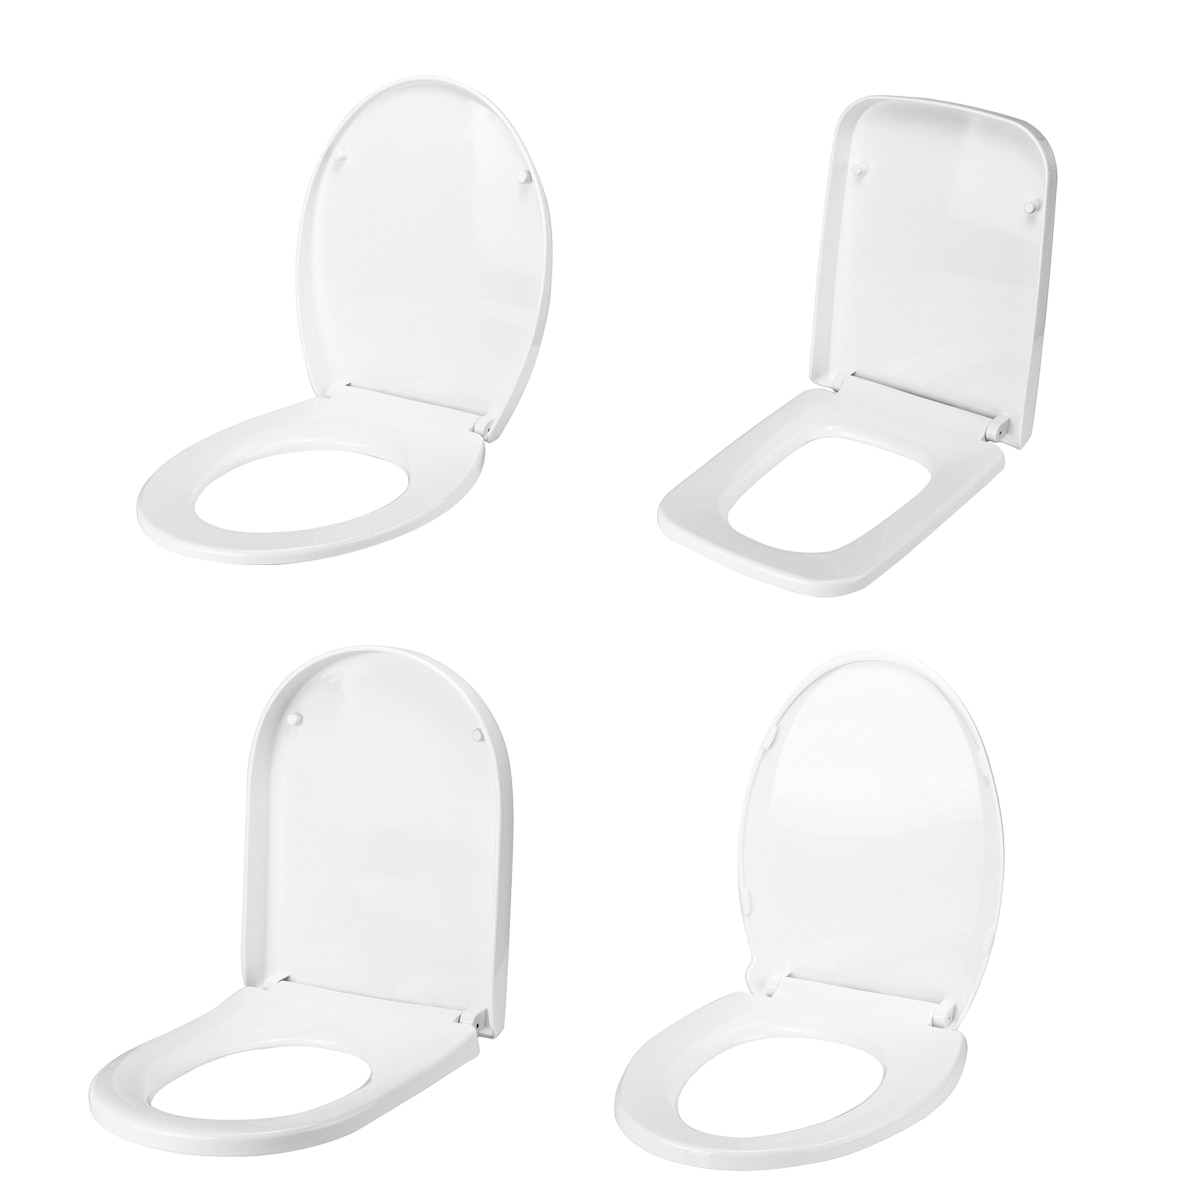 Pp Universele Slow-Close Toilet Seat Deksel Cover Set Dikker Vervanging Antibacteriële Vierkante Ronde O/V Type Wc zetels